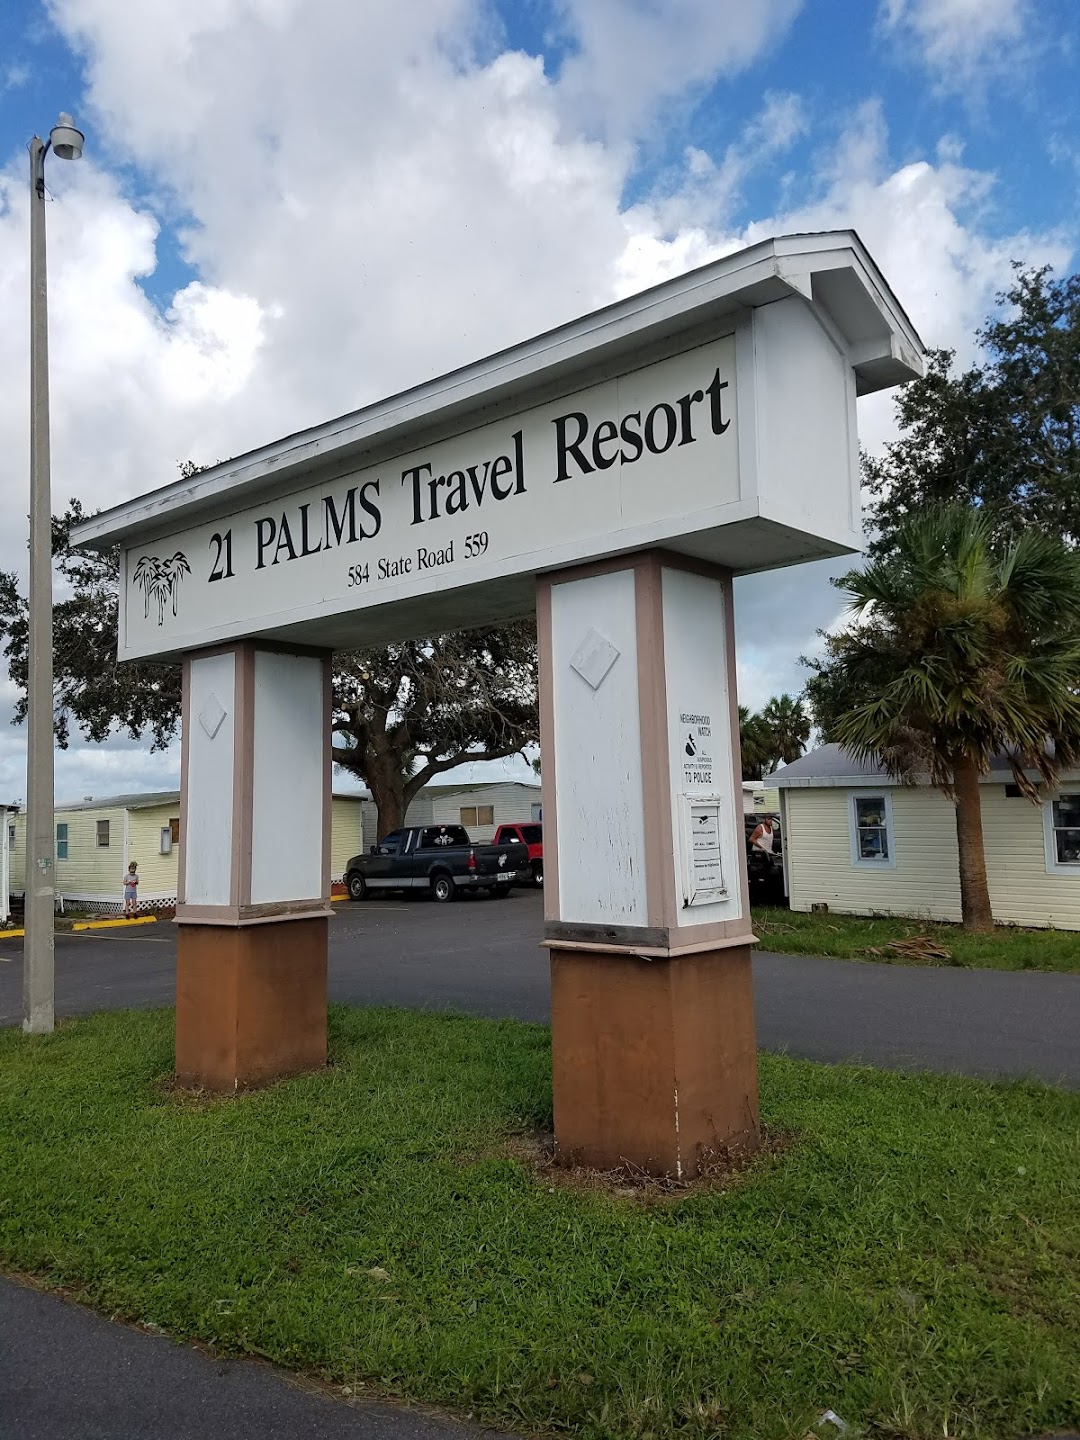 21 PALMS Travel Resort